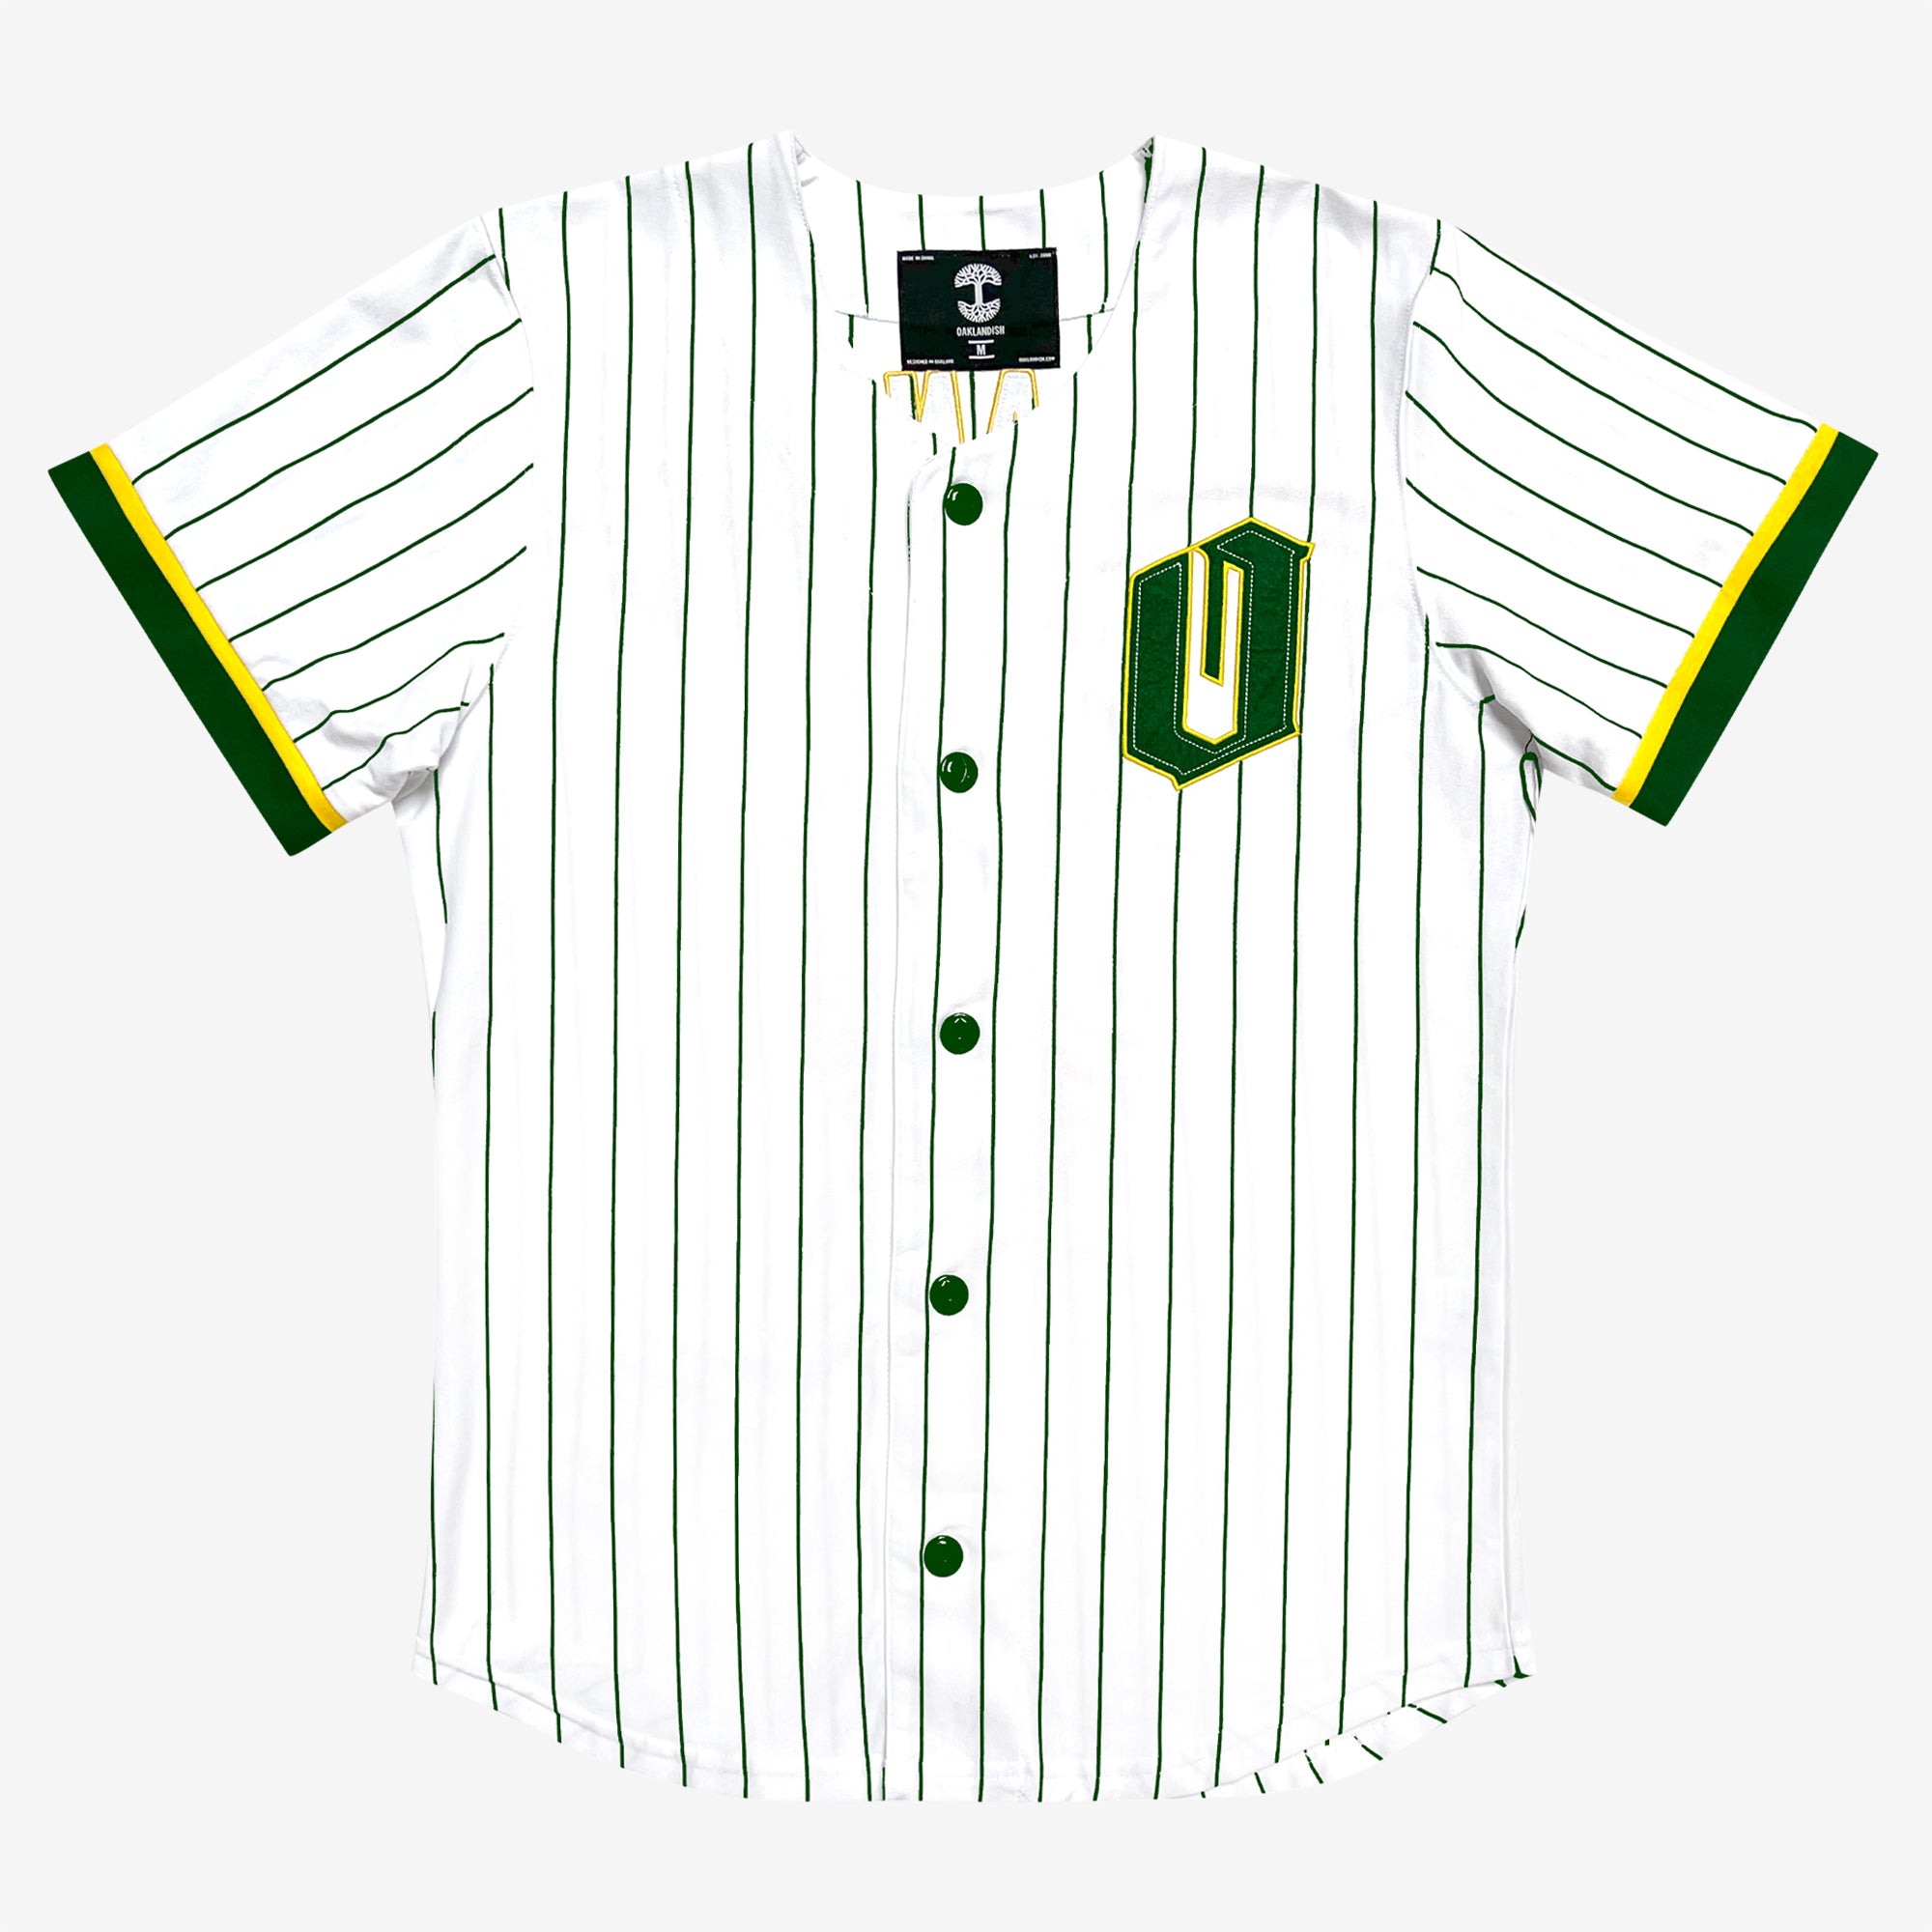 Oakland Athletics Baseball Jerseys, A's Jerseys, Authentic A's